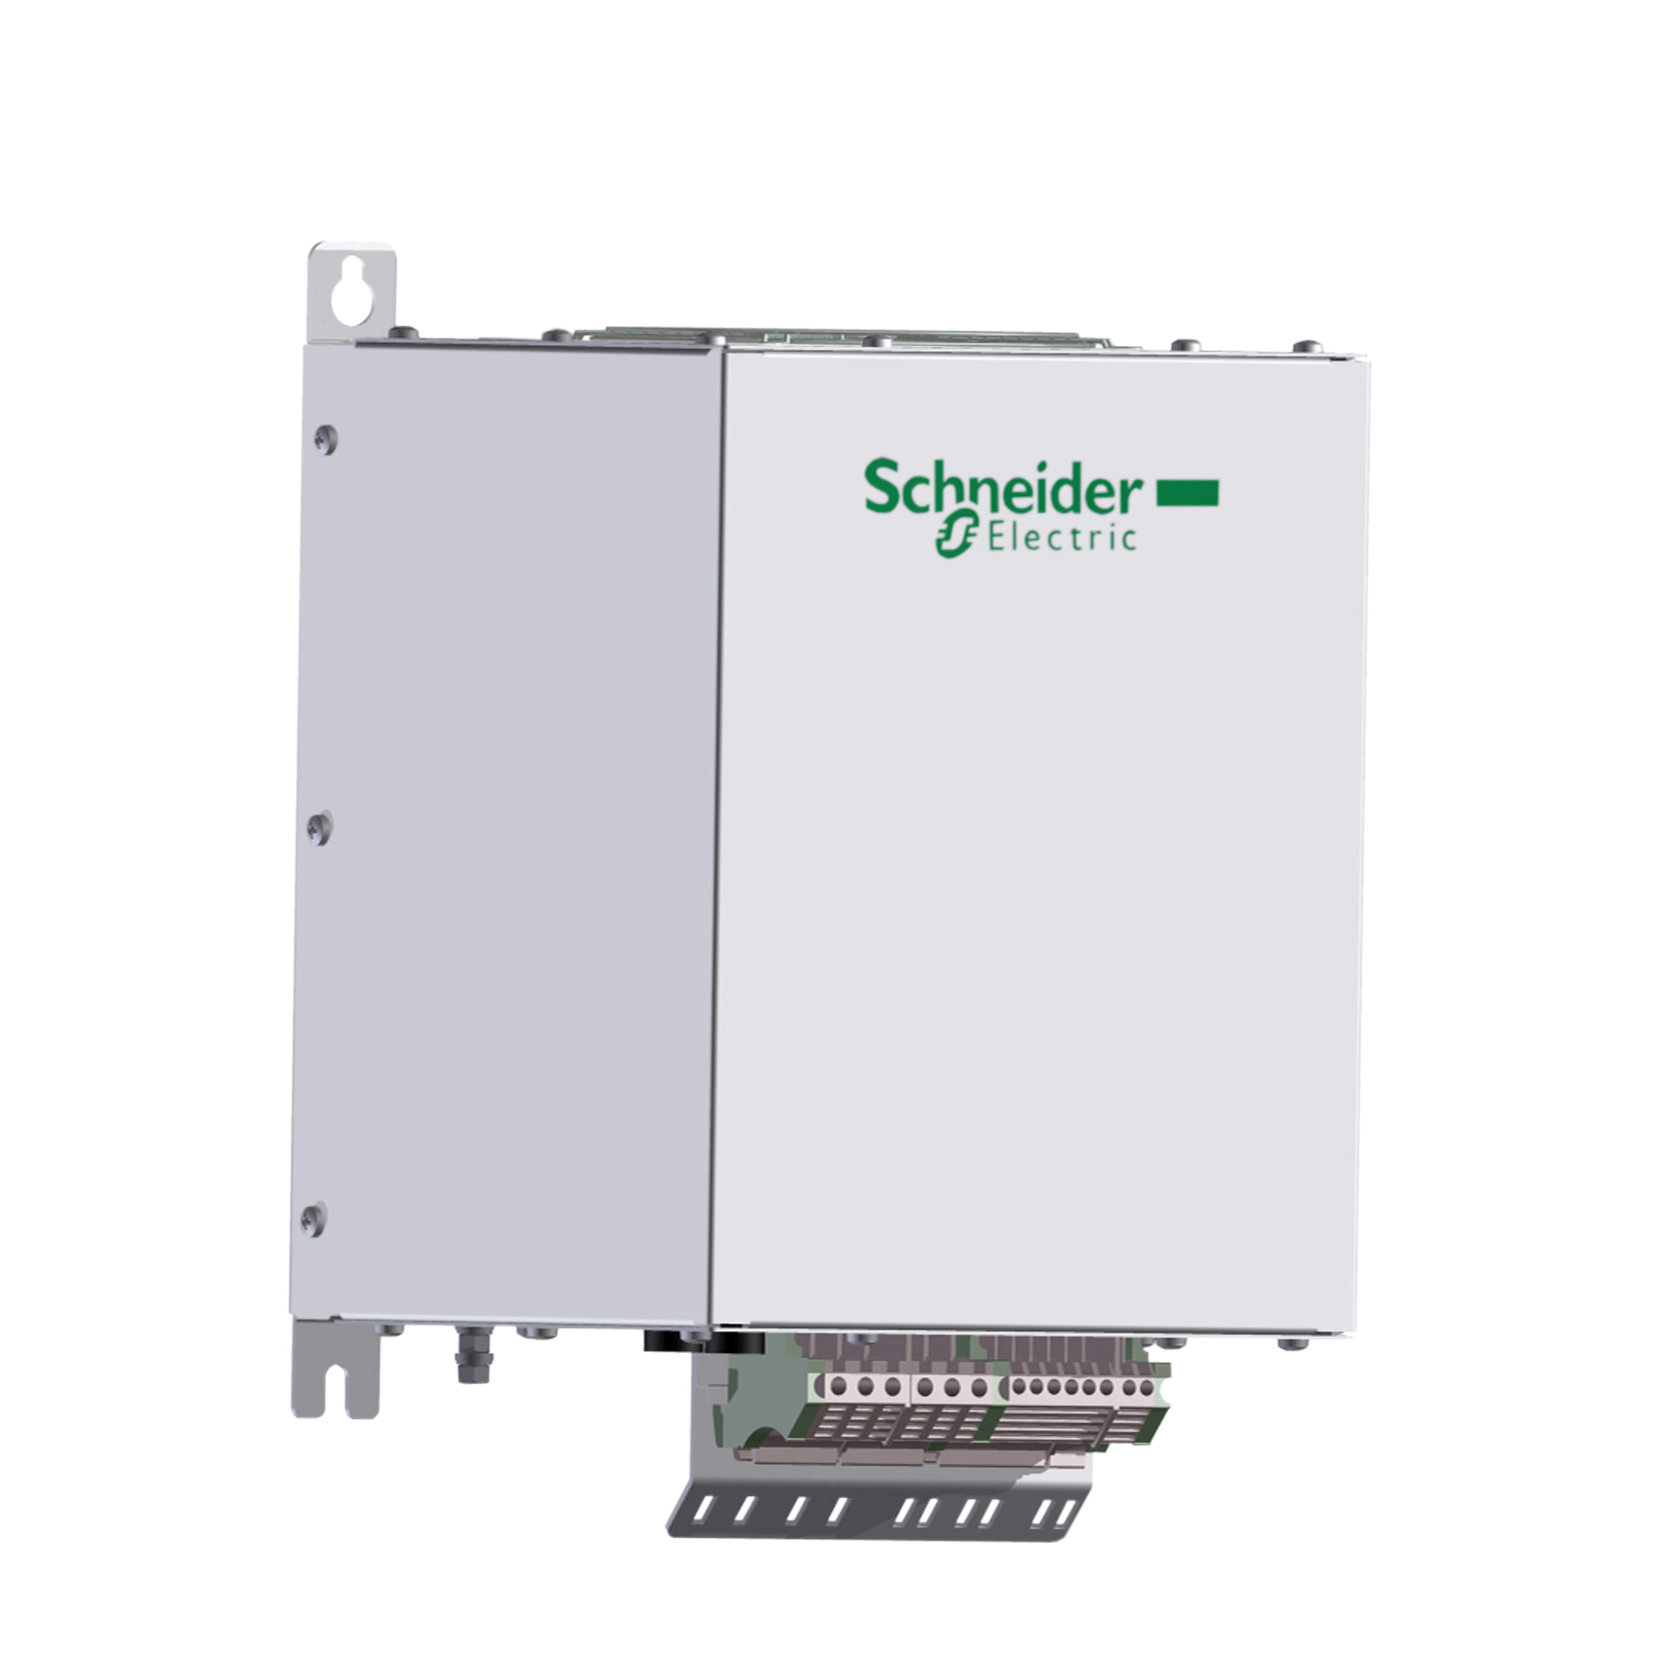 Schneider Electric 10A 400 V 50Hz Power Line Filter 3 Phase